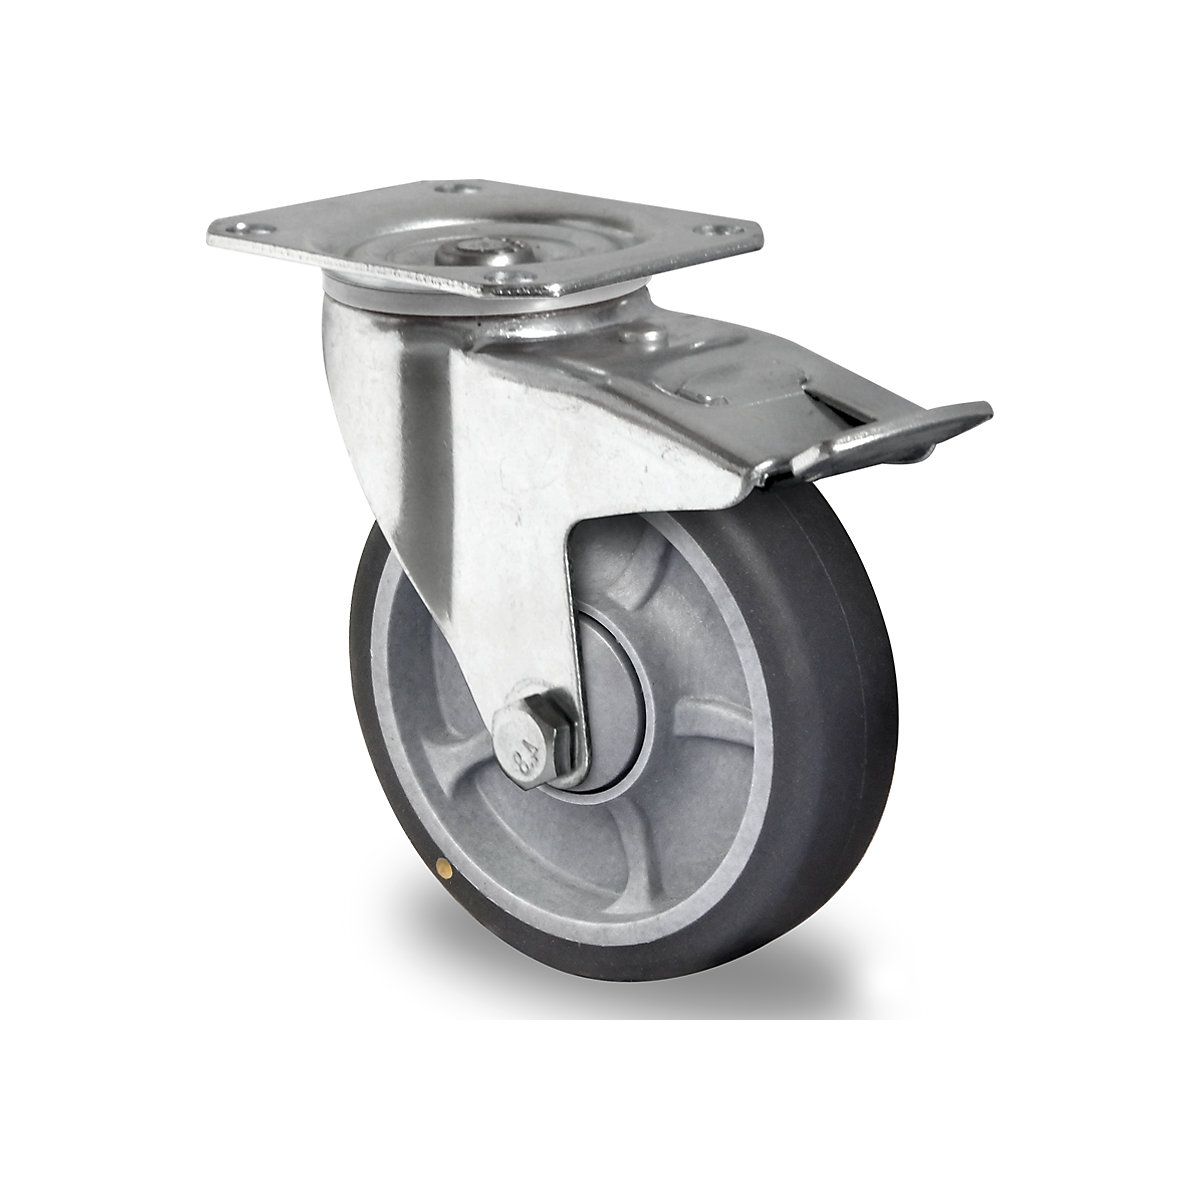 EUROKRAFTbasic – TPE tyres on PP rim, ESD, 2+ items, wheel Ø x width 125 x 35 mm, swivel castor with double stop